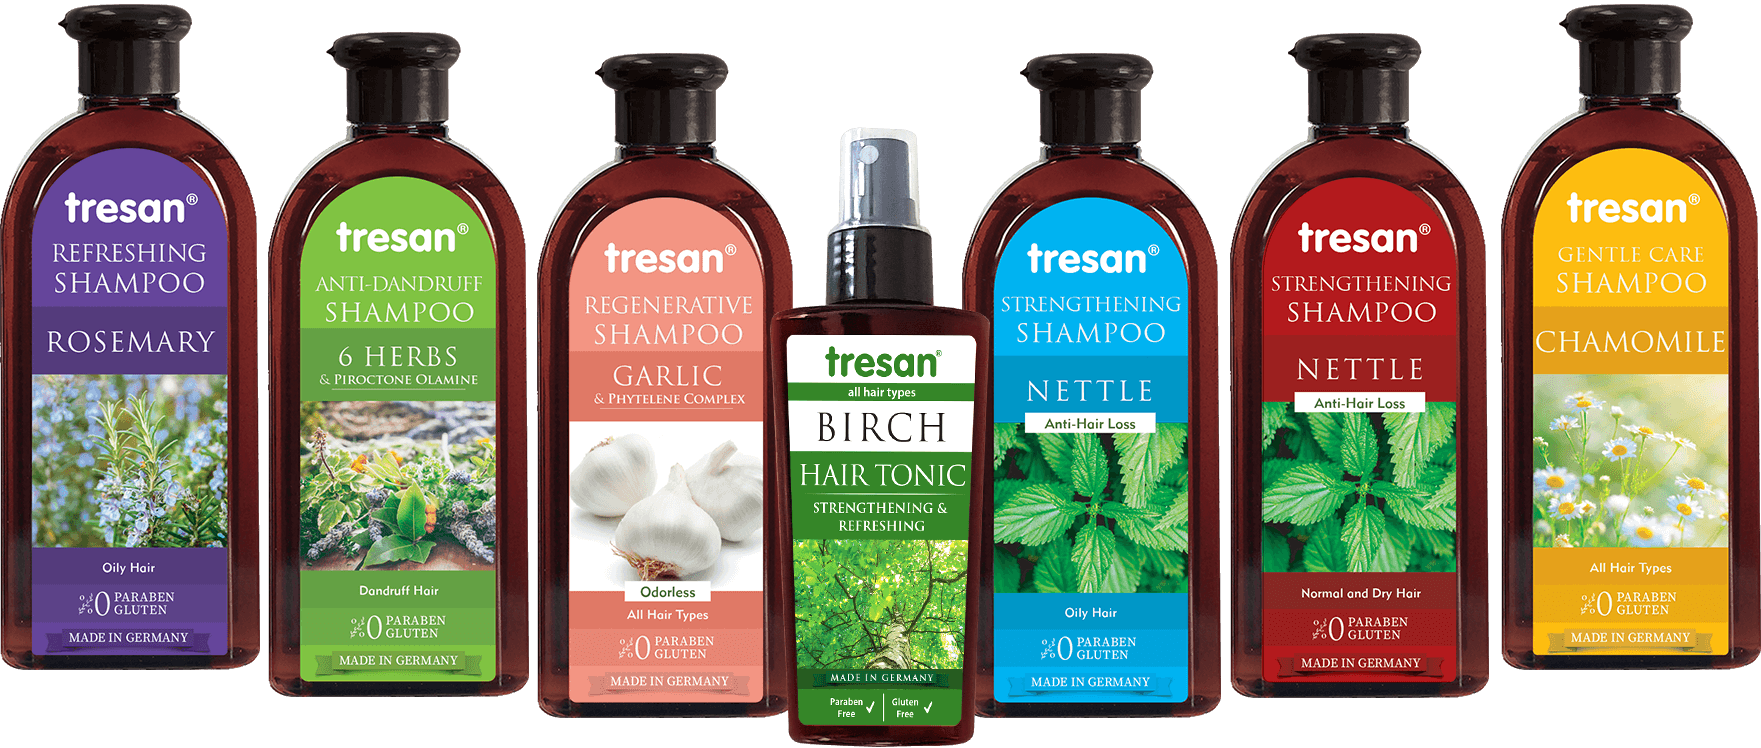 tresan hair care products - hair shampoo